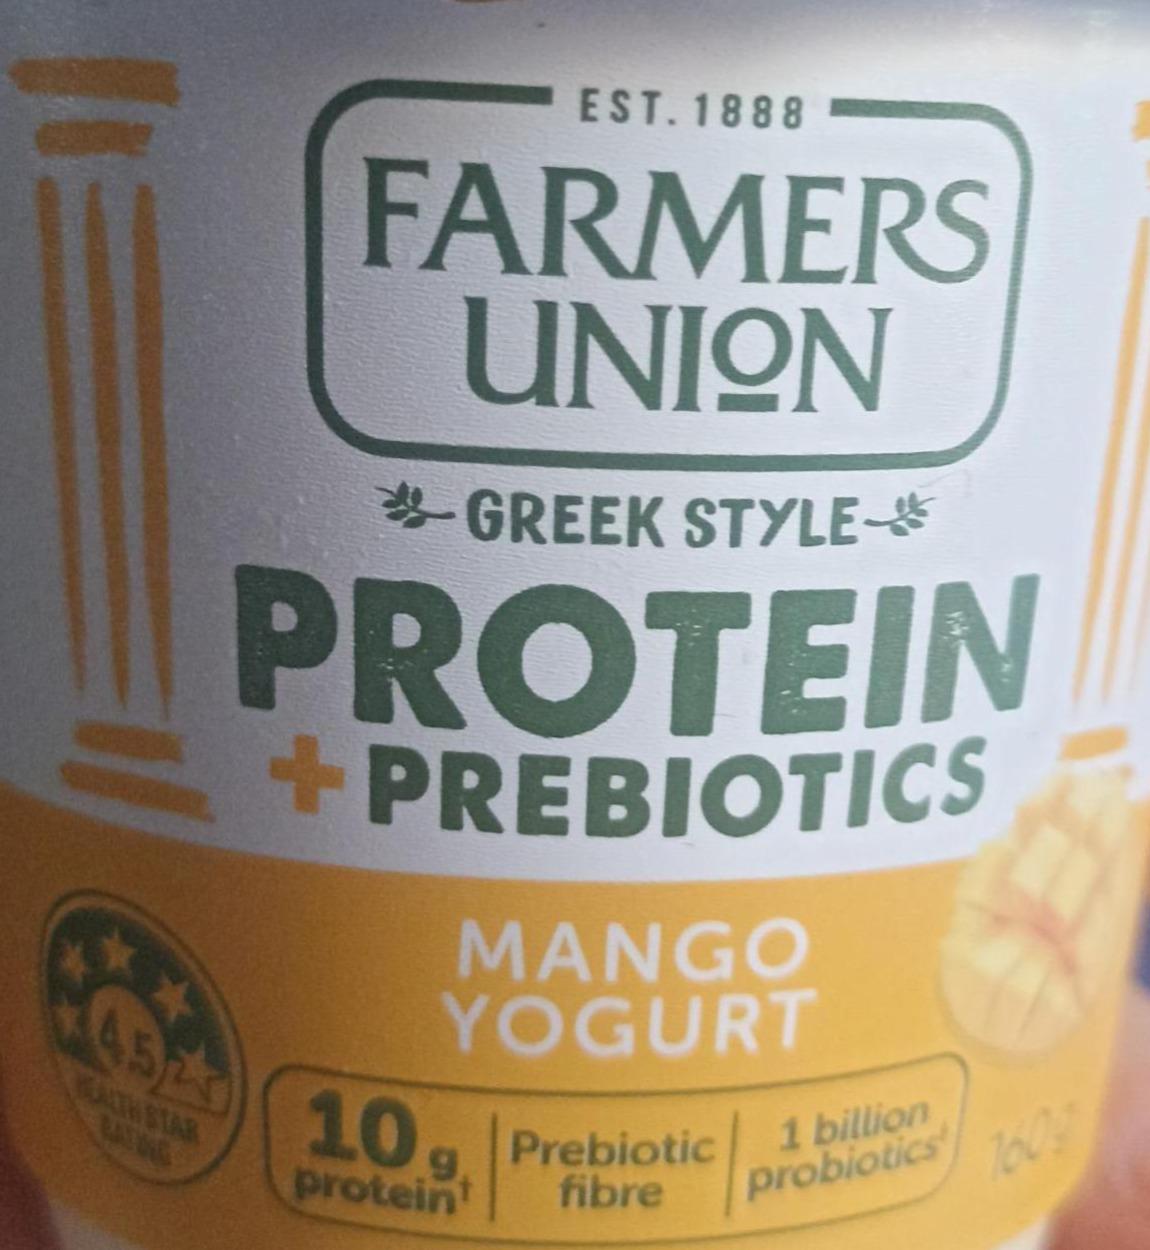 Фото - Greek style Protein + Prebiotics Mango Yogurt Farmers Union